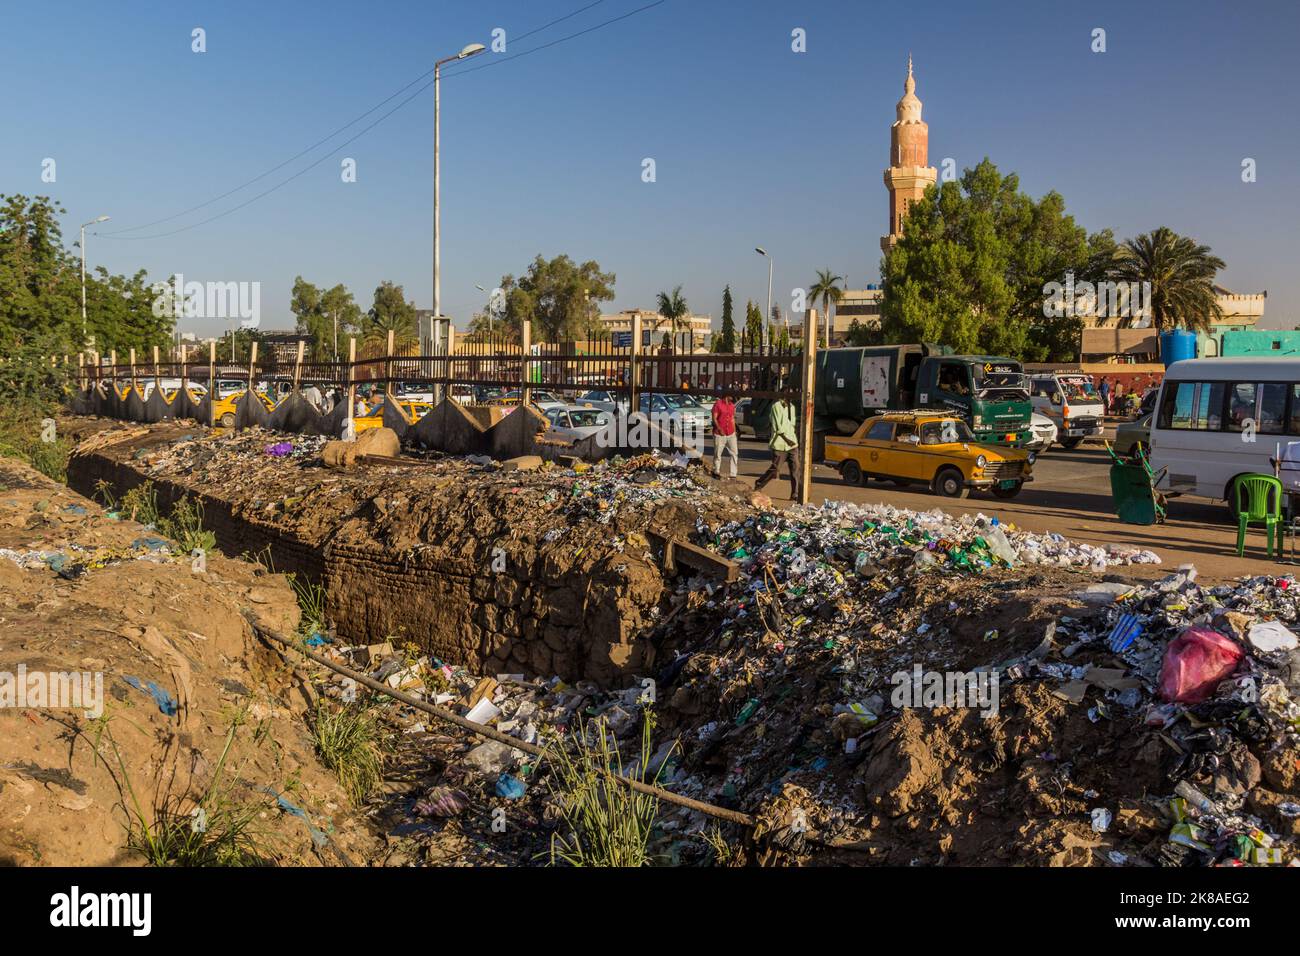 KHARTOUM, SUDAN - MARCH 7, 2019: Rubbish in a ditch in Khartoum, capital of Sudan Stock Photo